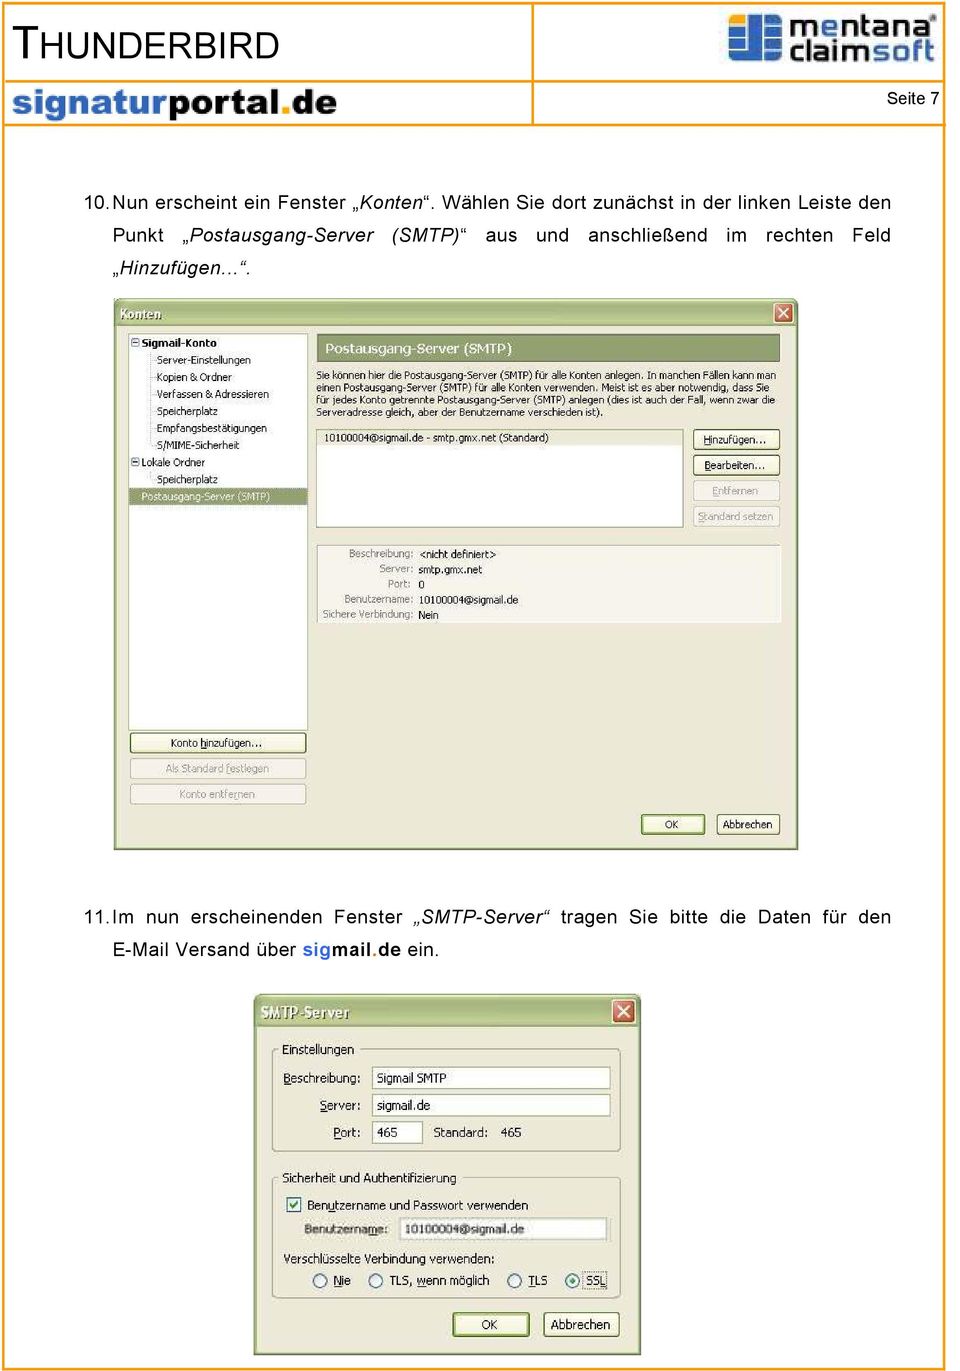 Postausgang-Server (SMTP) aus und anschließend im rechten Feld Hinzufügen.